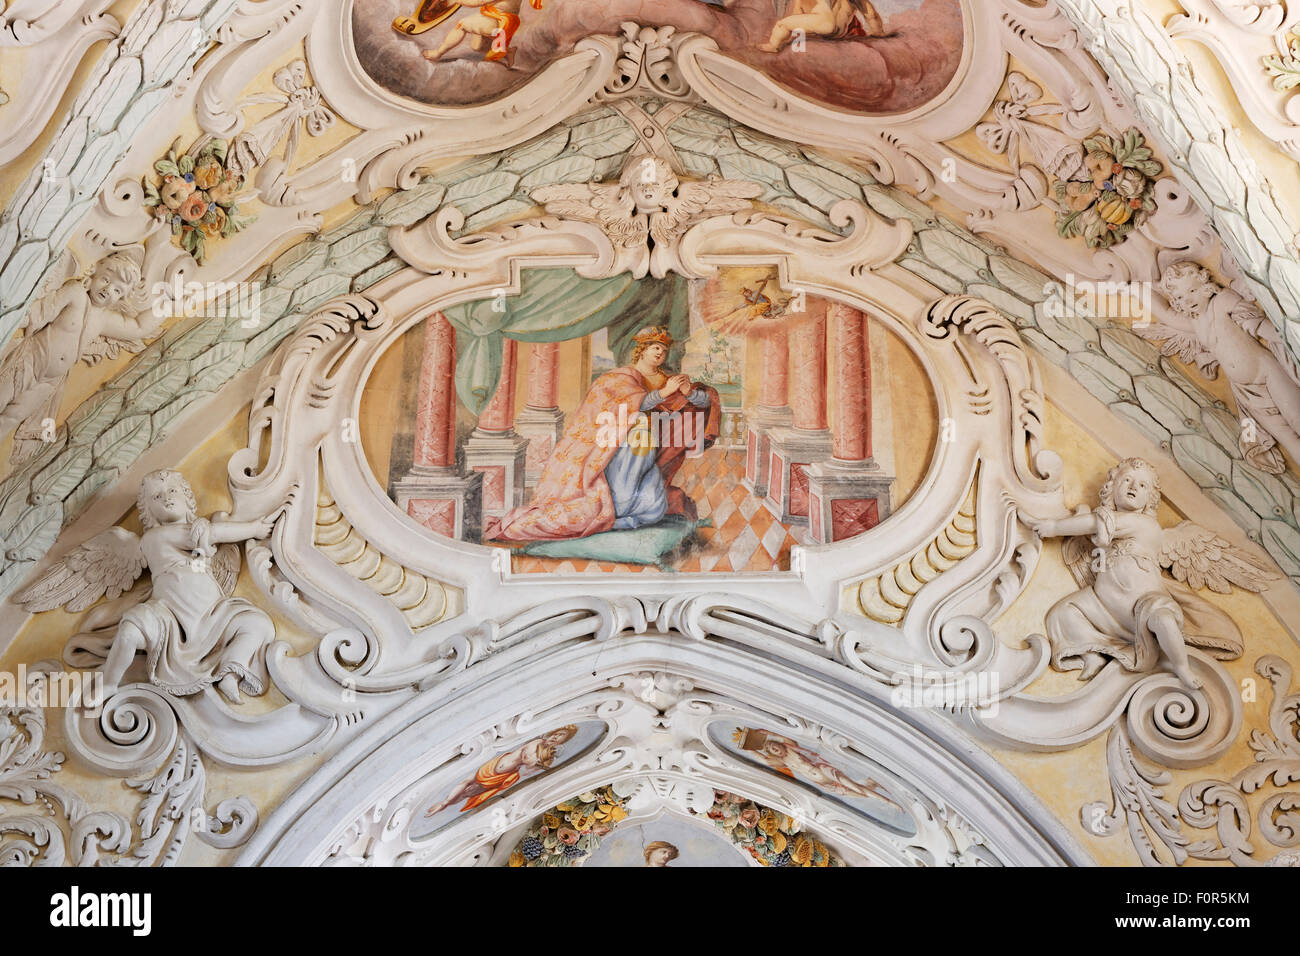 Stucchi e affreschi sul soffitto, chiesa Collegiata Ardagger Stift, Mostviertel, Austria Inferiore, Austria Foto Stock